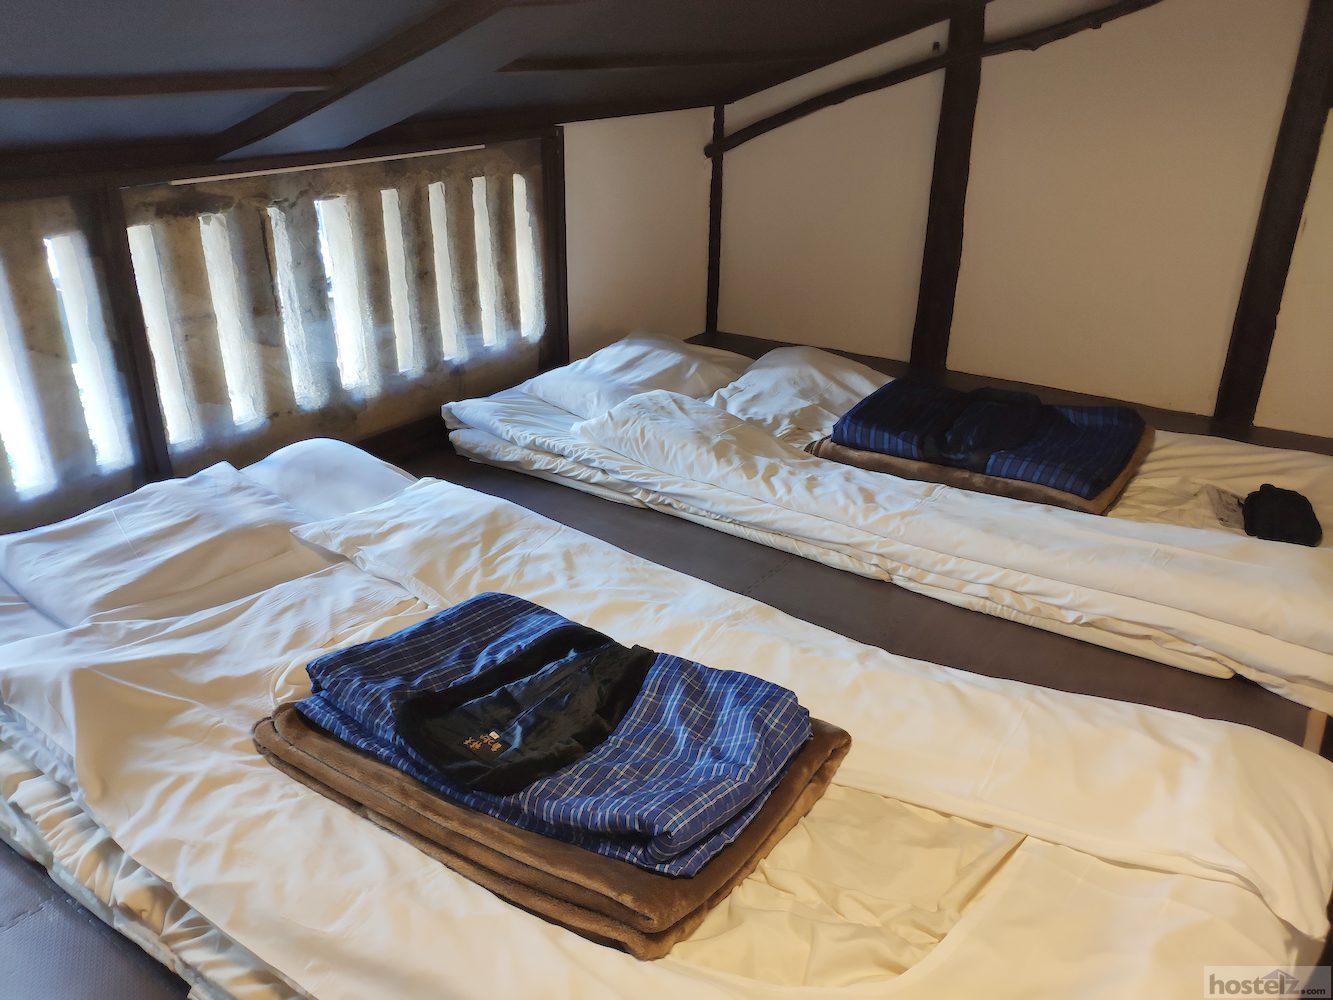 futon beds